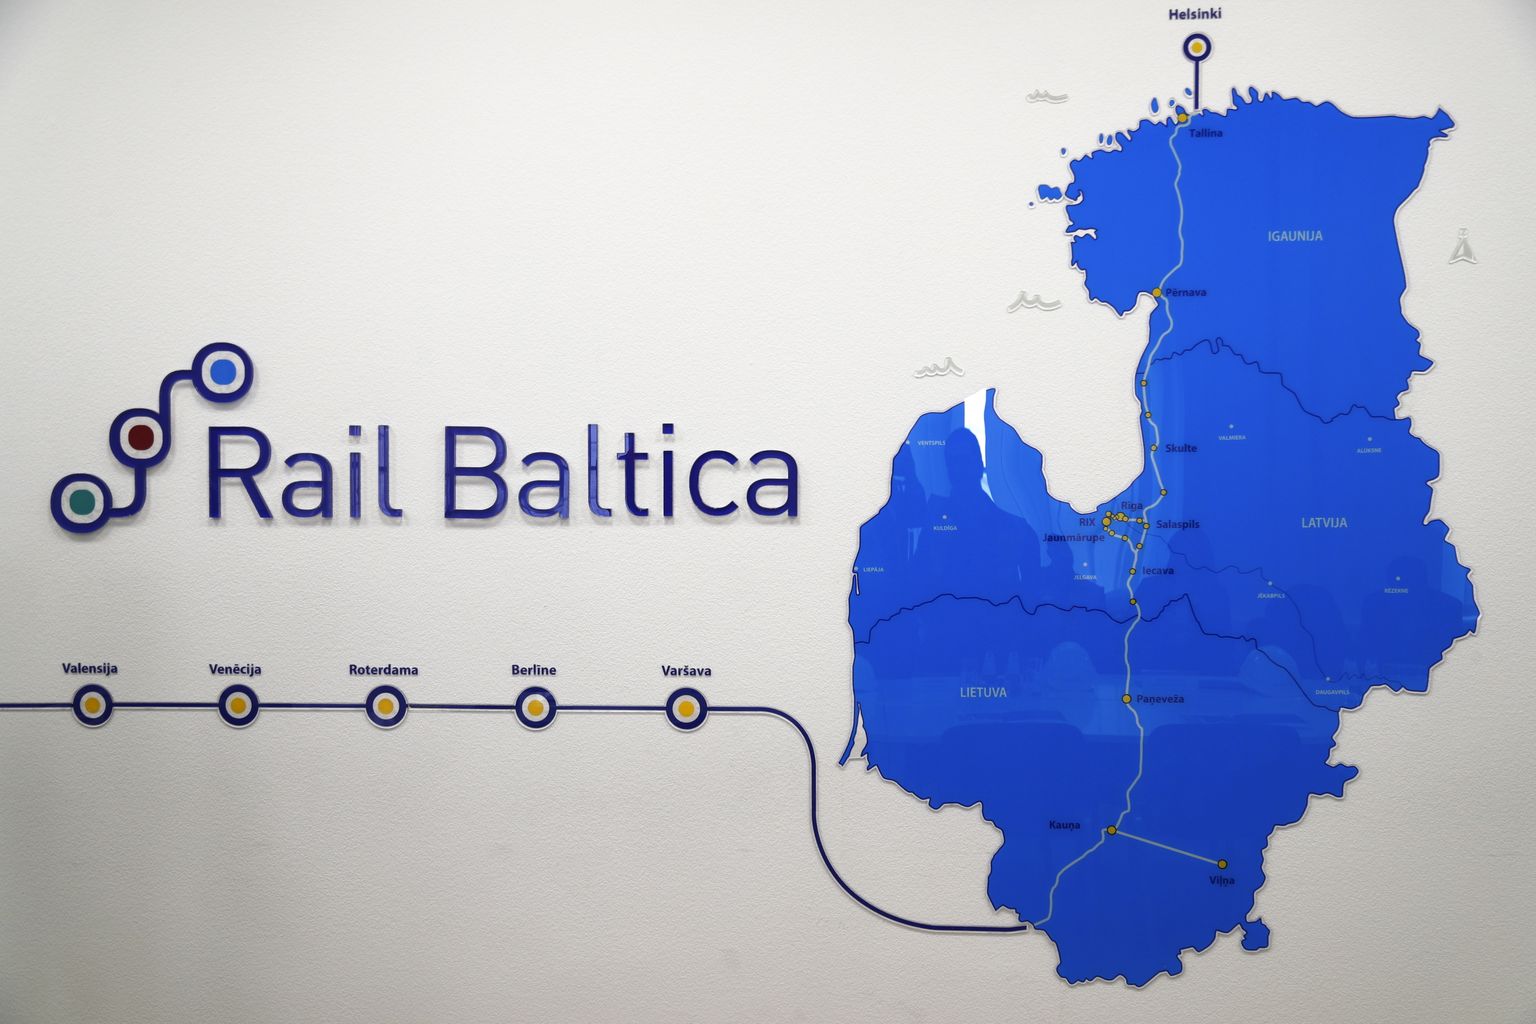 Rail Balticu skeem plakatil.